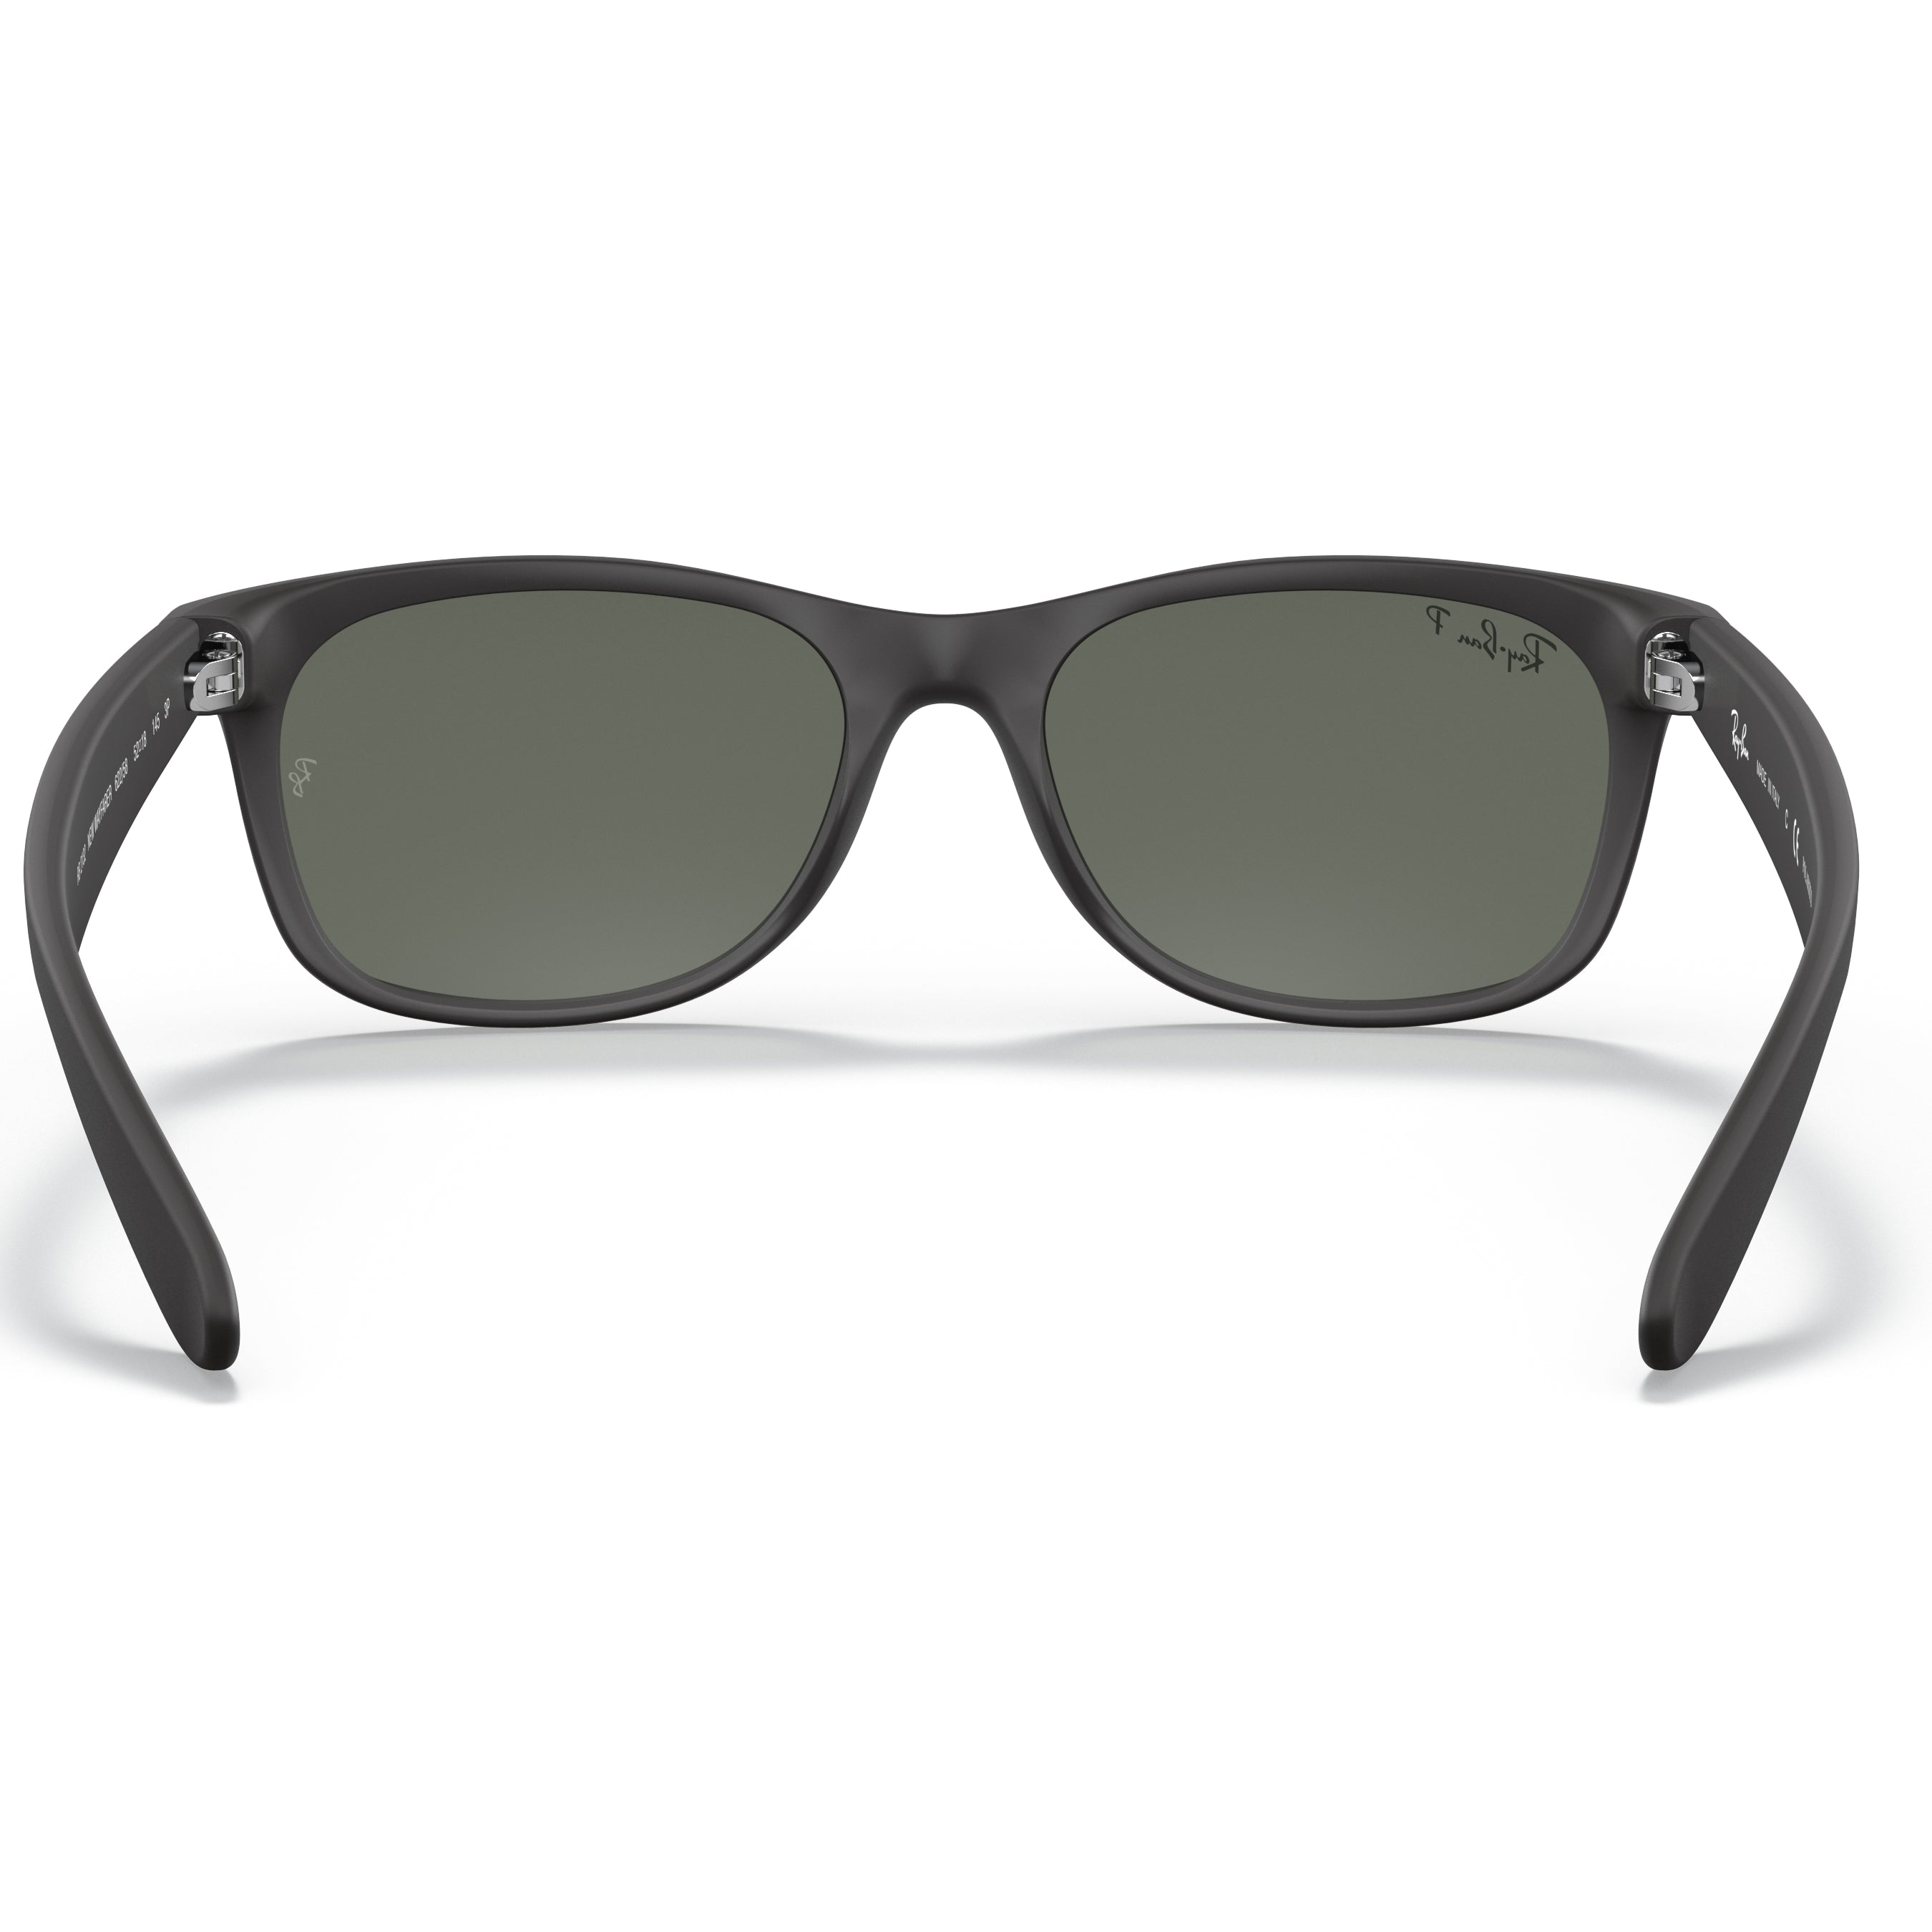 Ray-Ban Ray-Ban New Wayfarer Green Polarized Polarized Wayfarer Men's Sunglasses RB2132 622/58 55